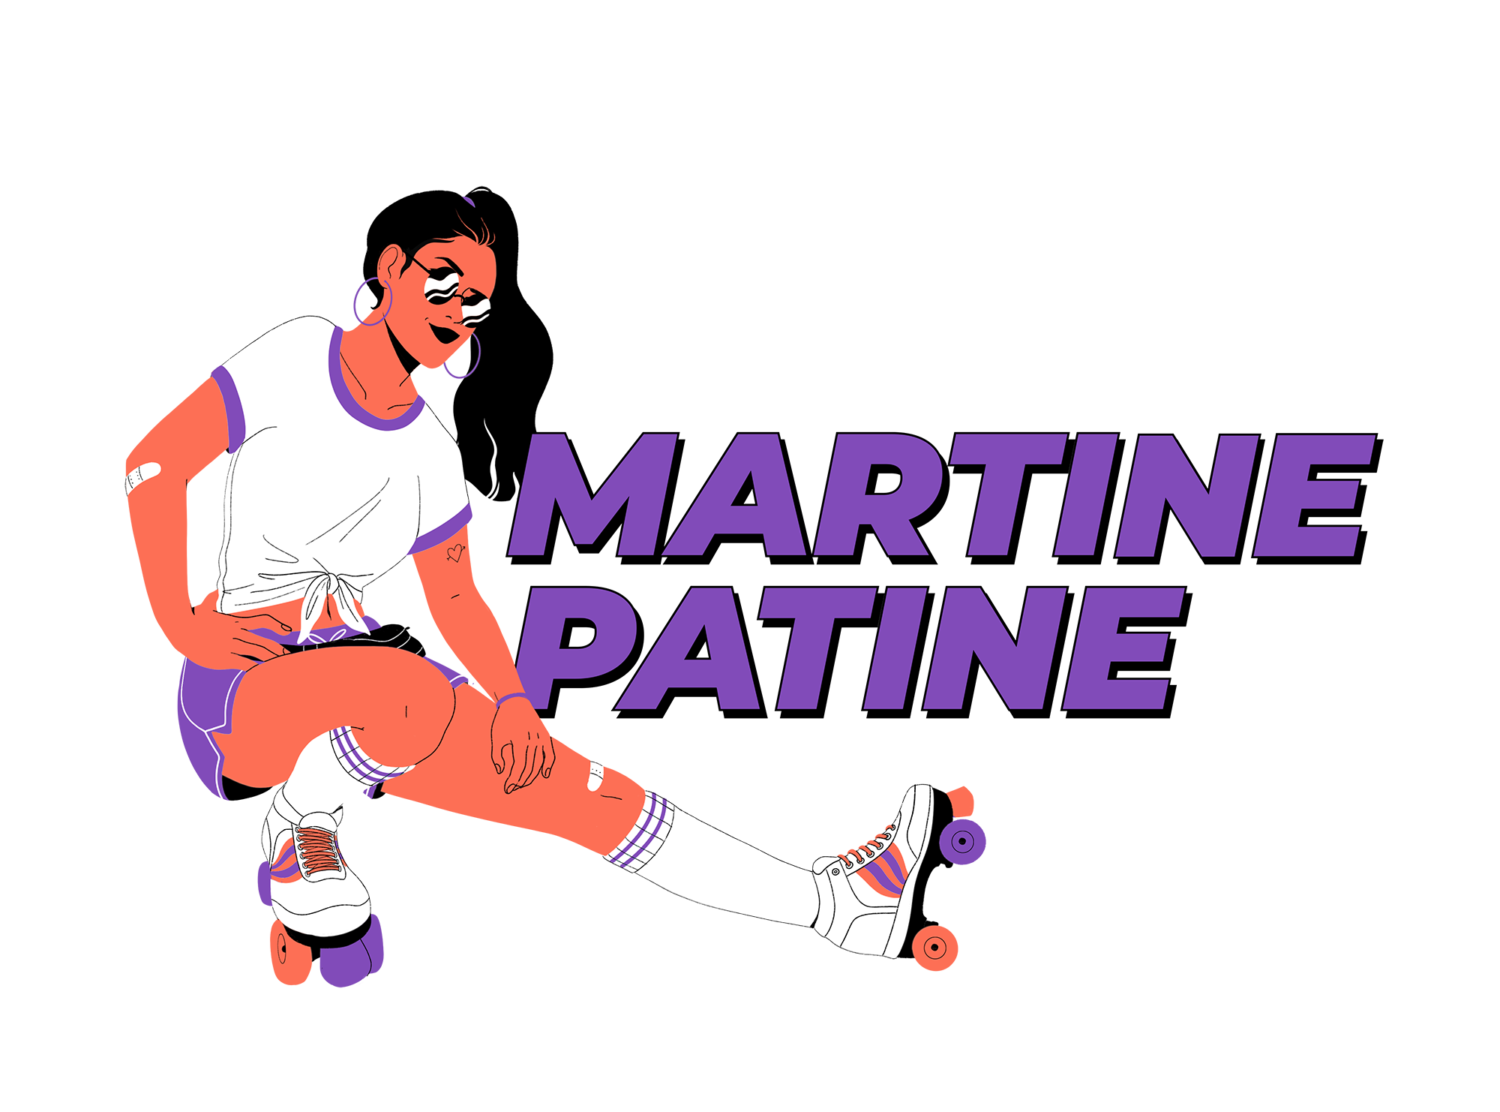 Martine Patine